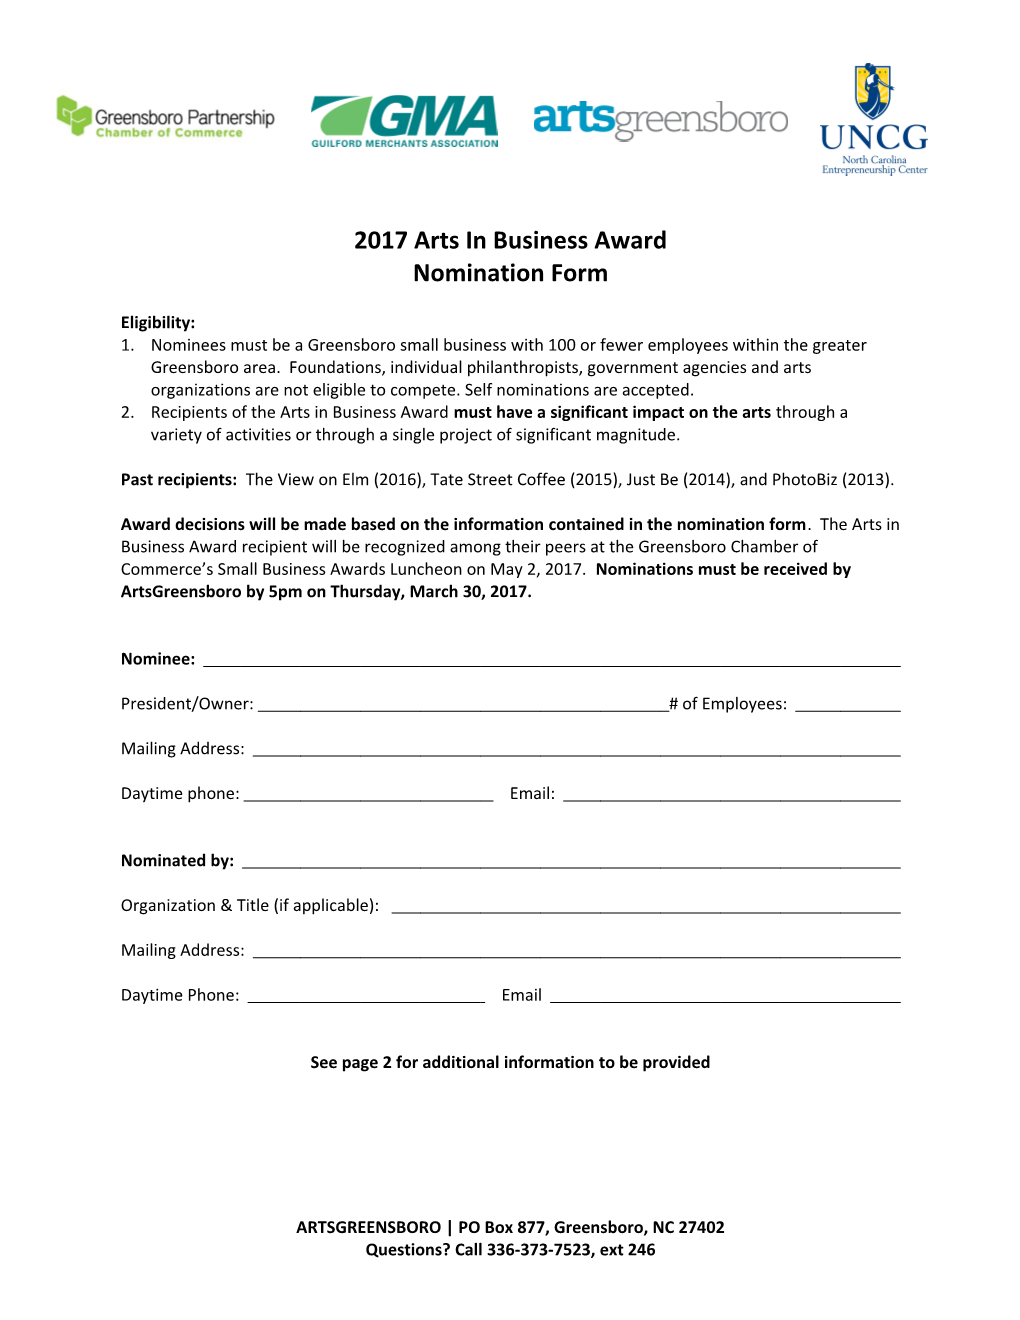 2017 Arts in Business Award